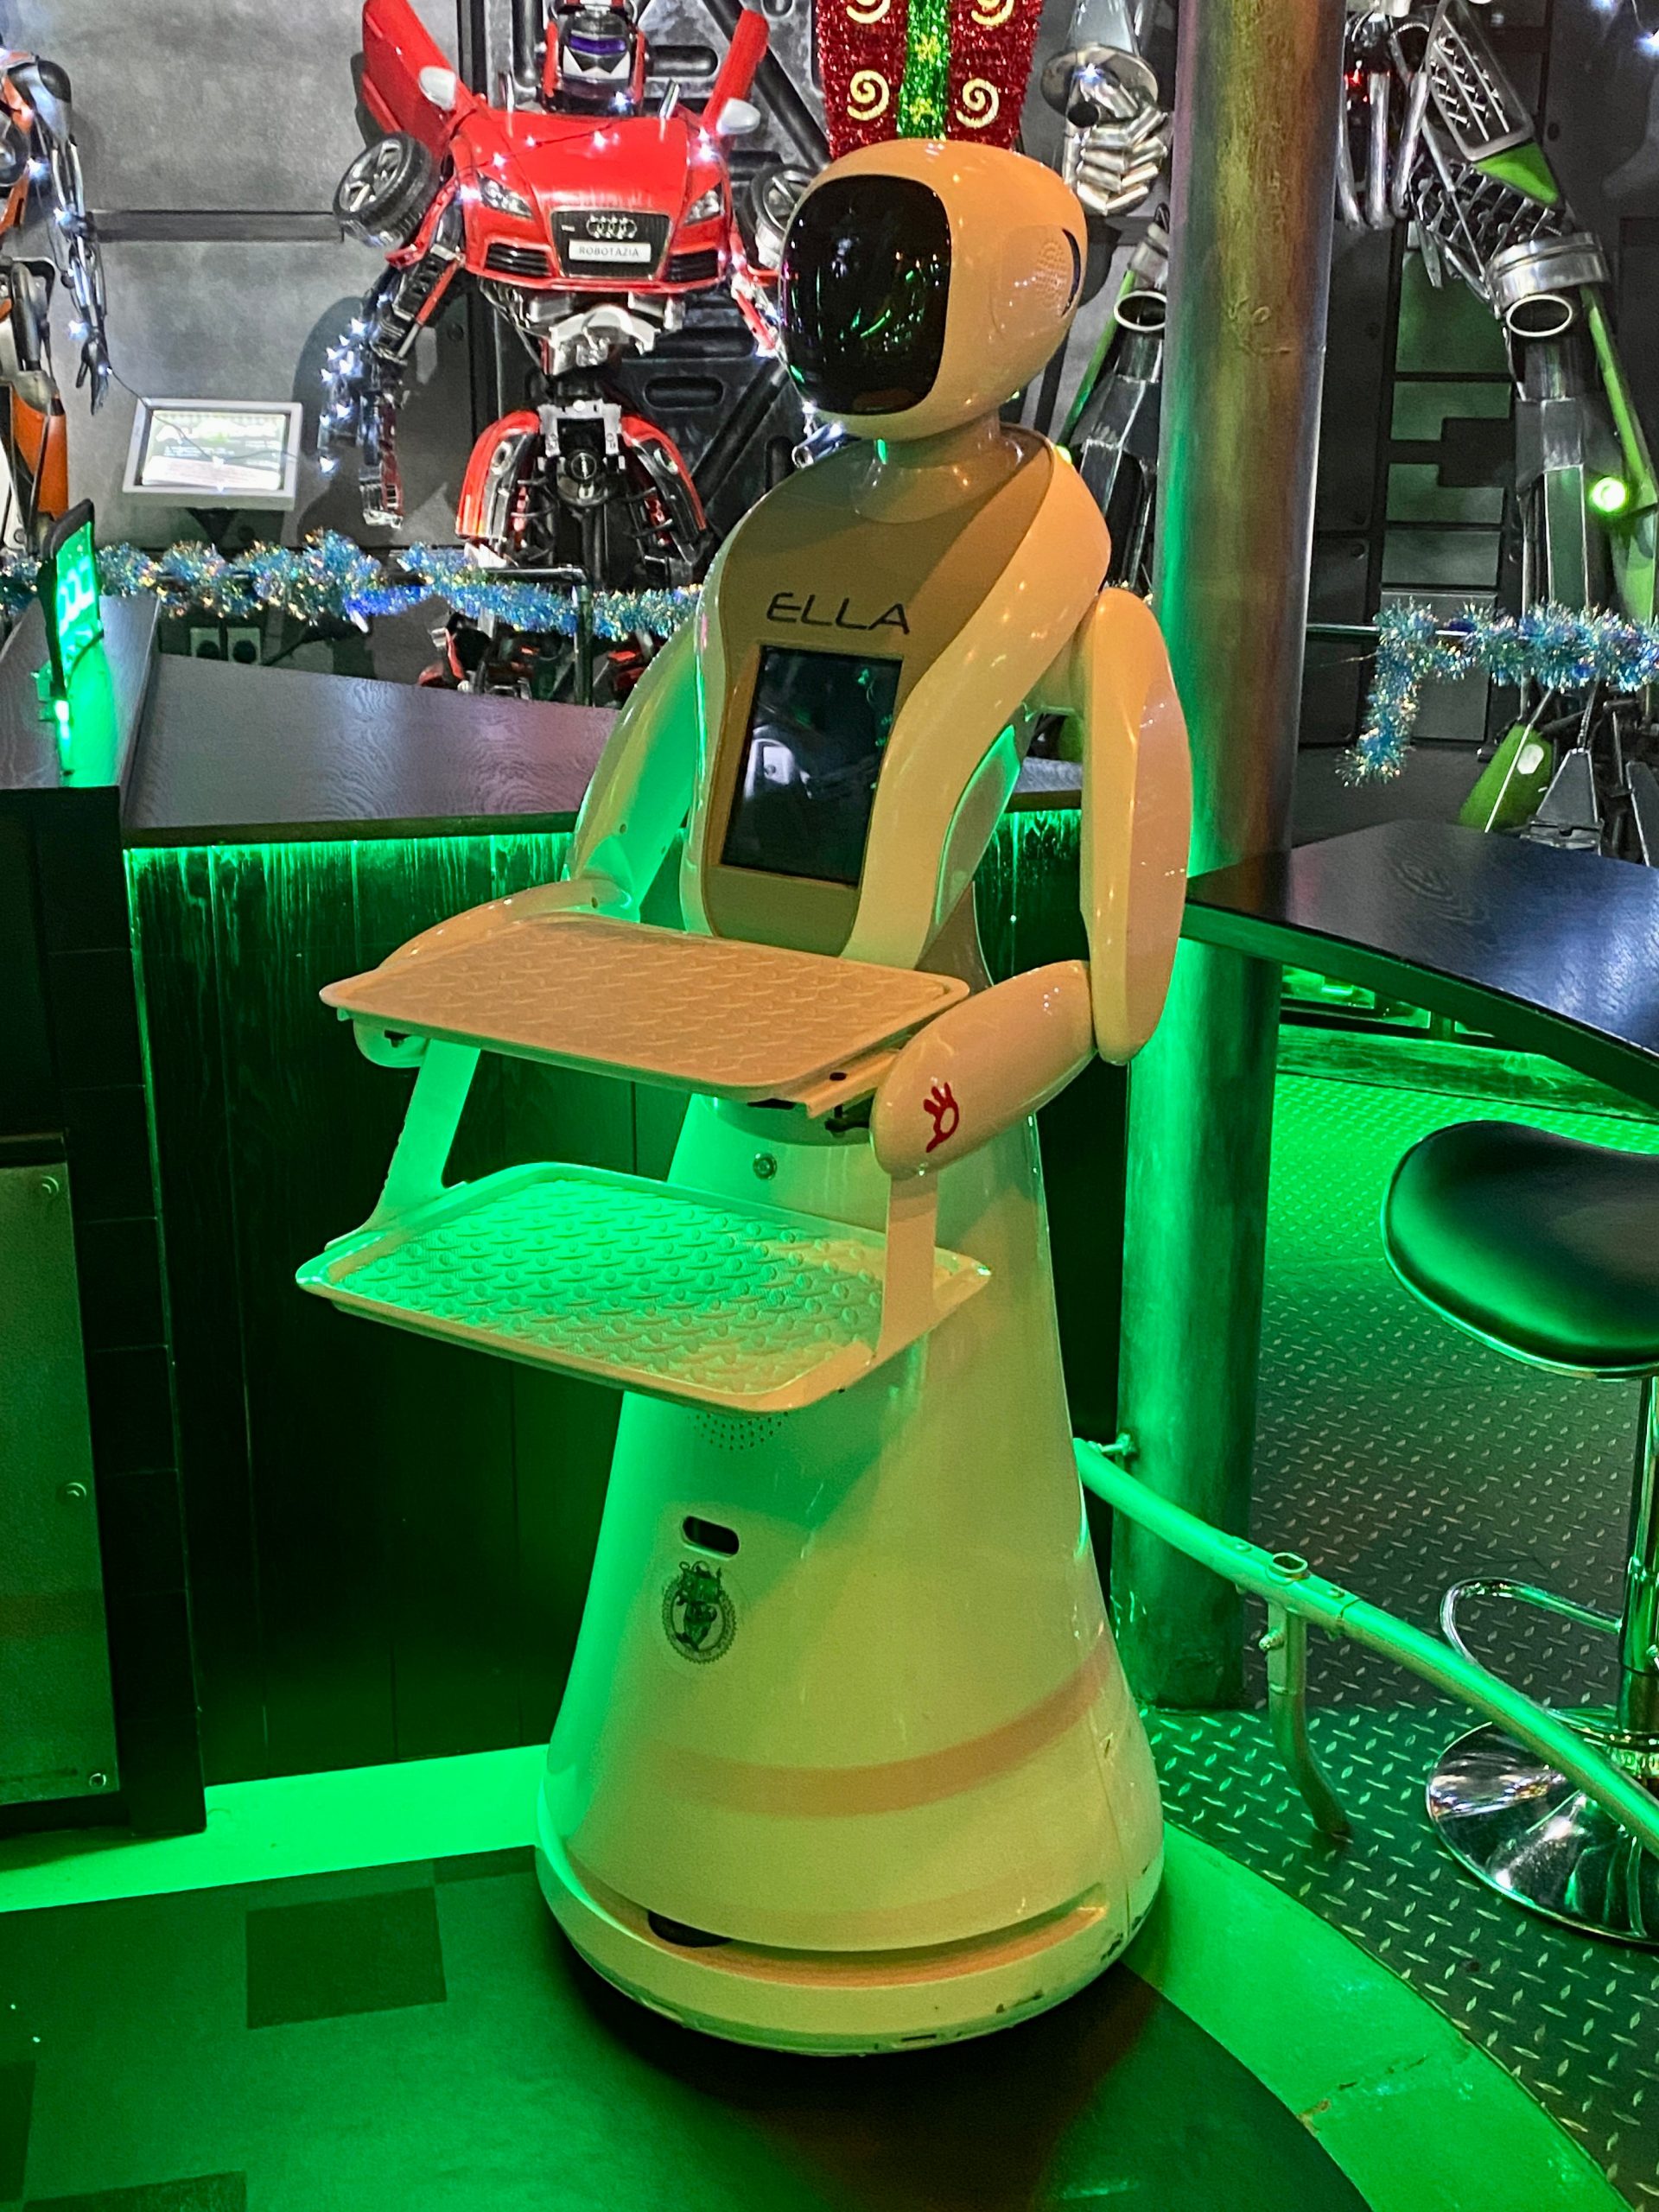 "Ella" the robot inside Robotazia